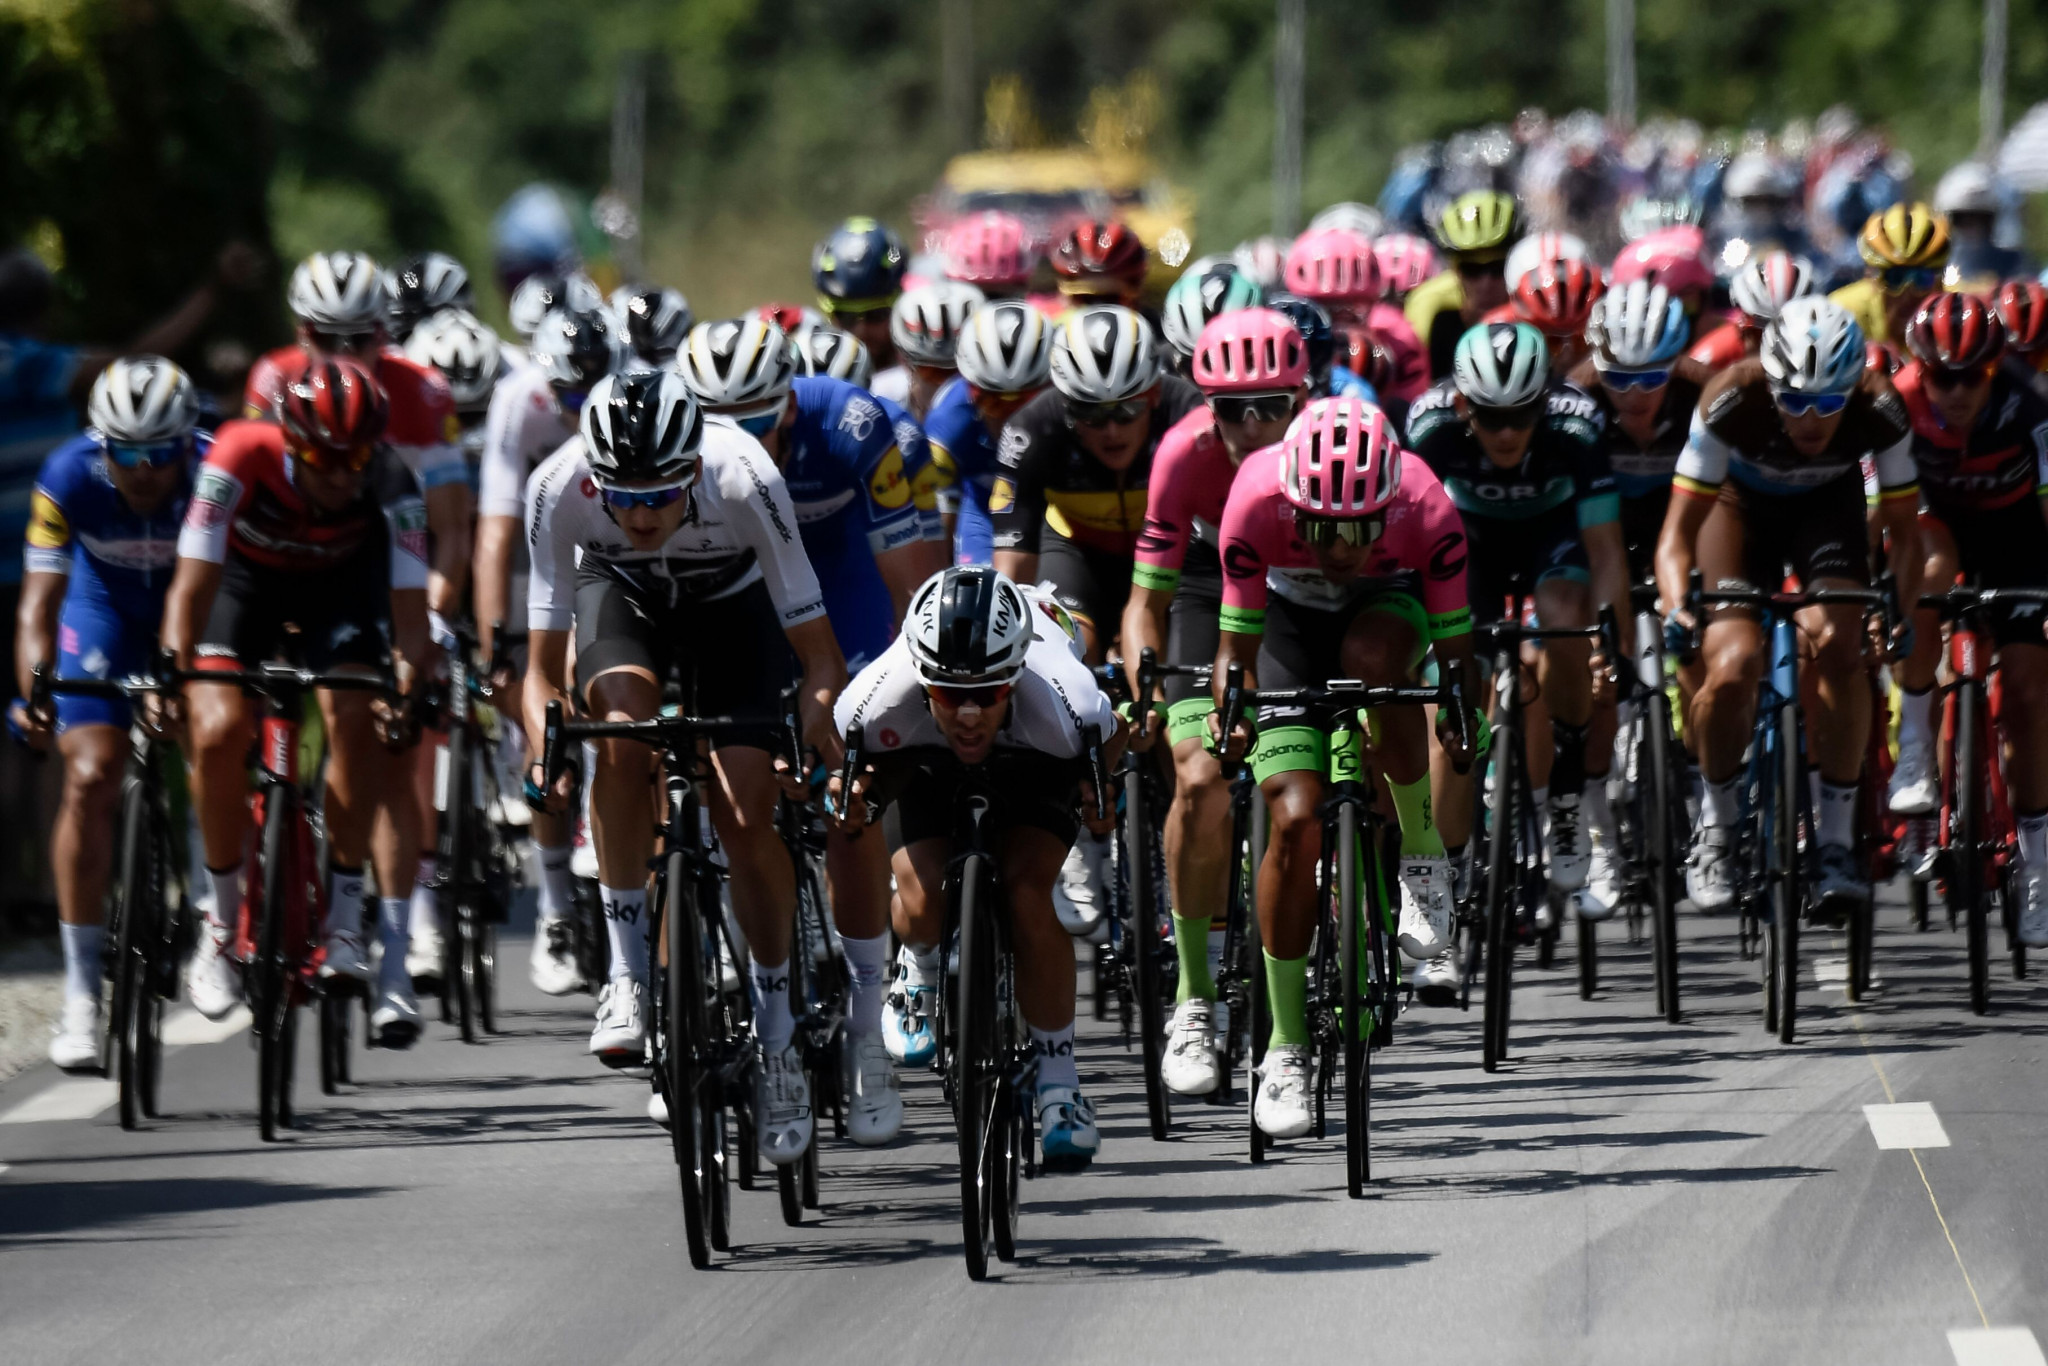 Brest confirmed as replacement Grand Depart host of 2021 Tour de France